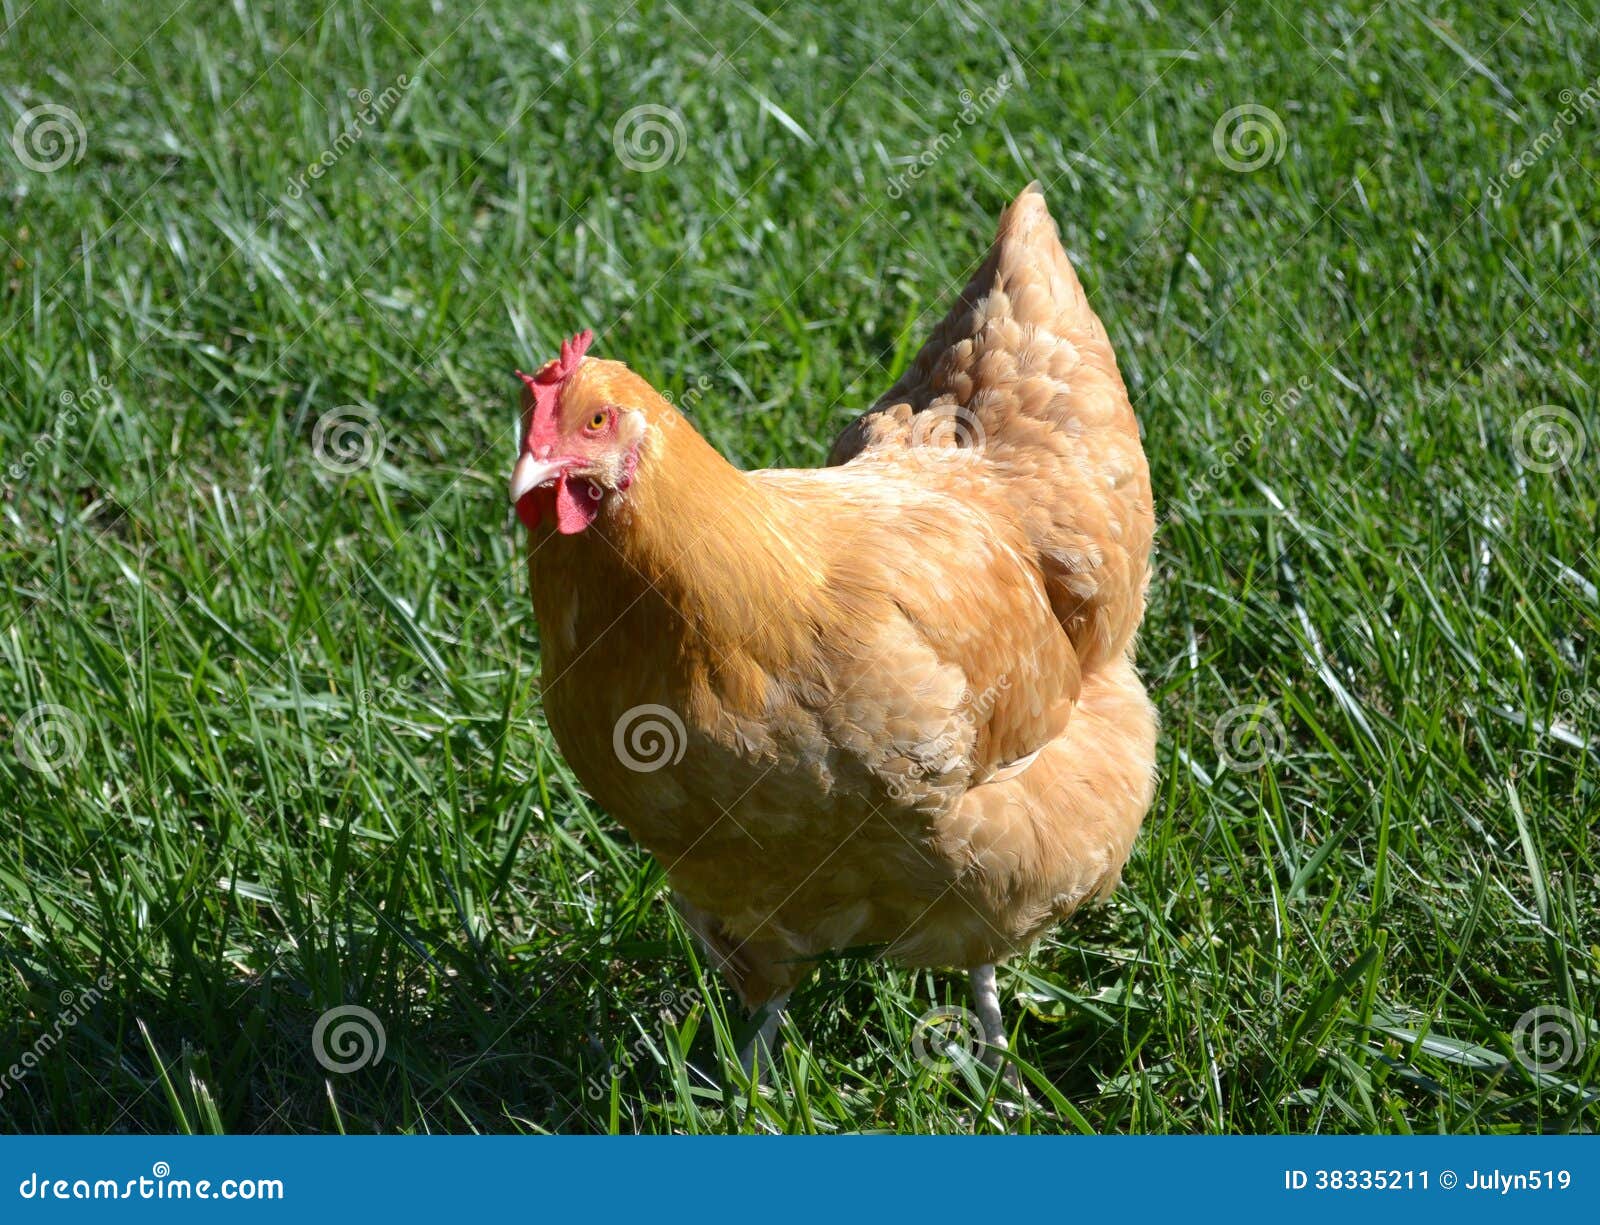 poultry chicken gold buff orpington hen